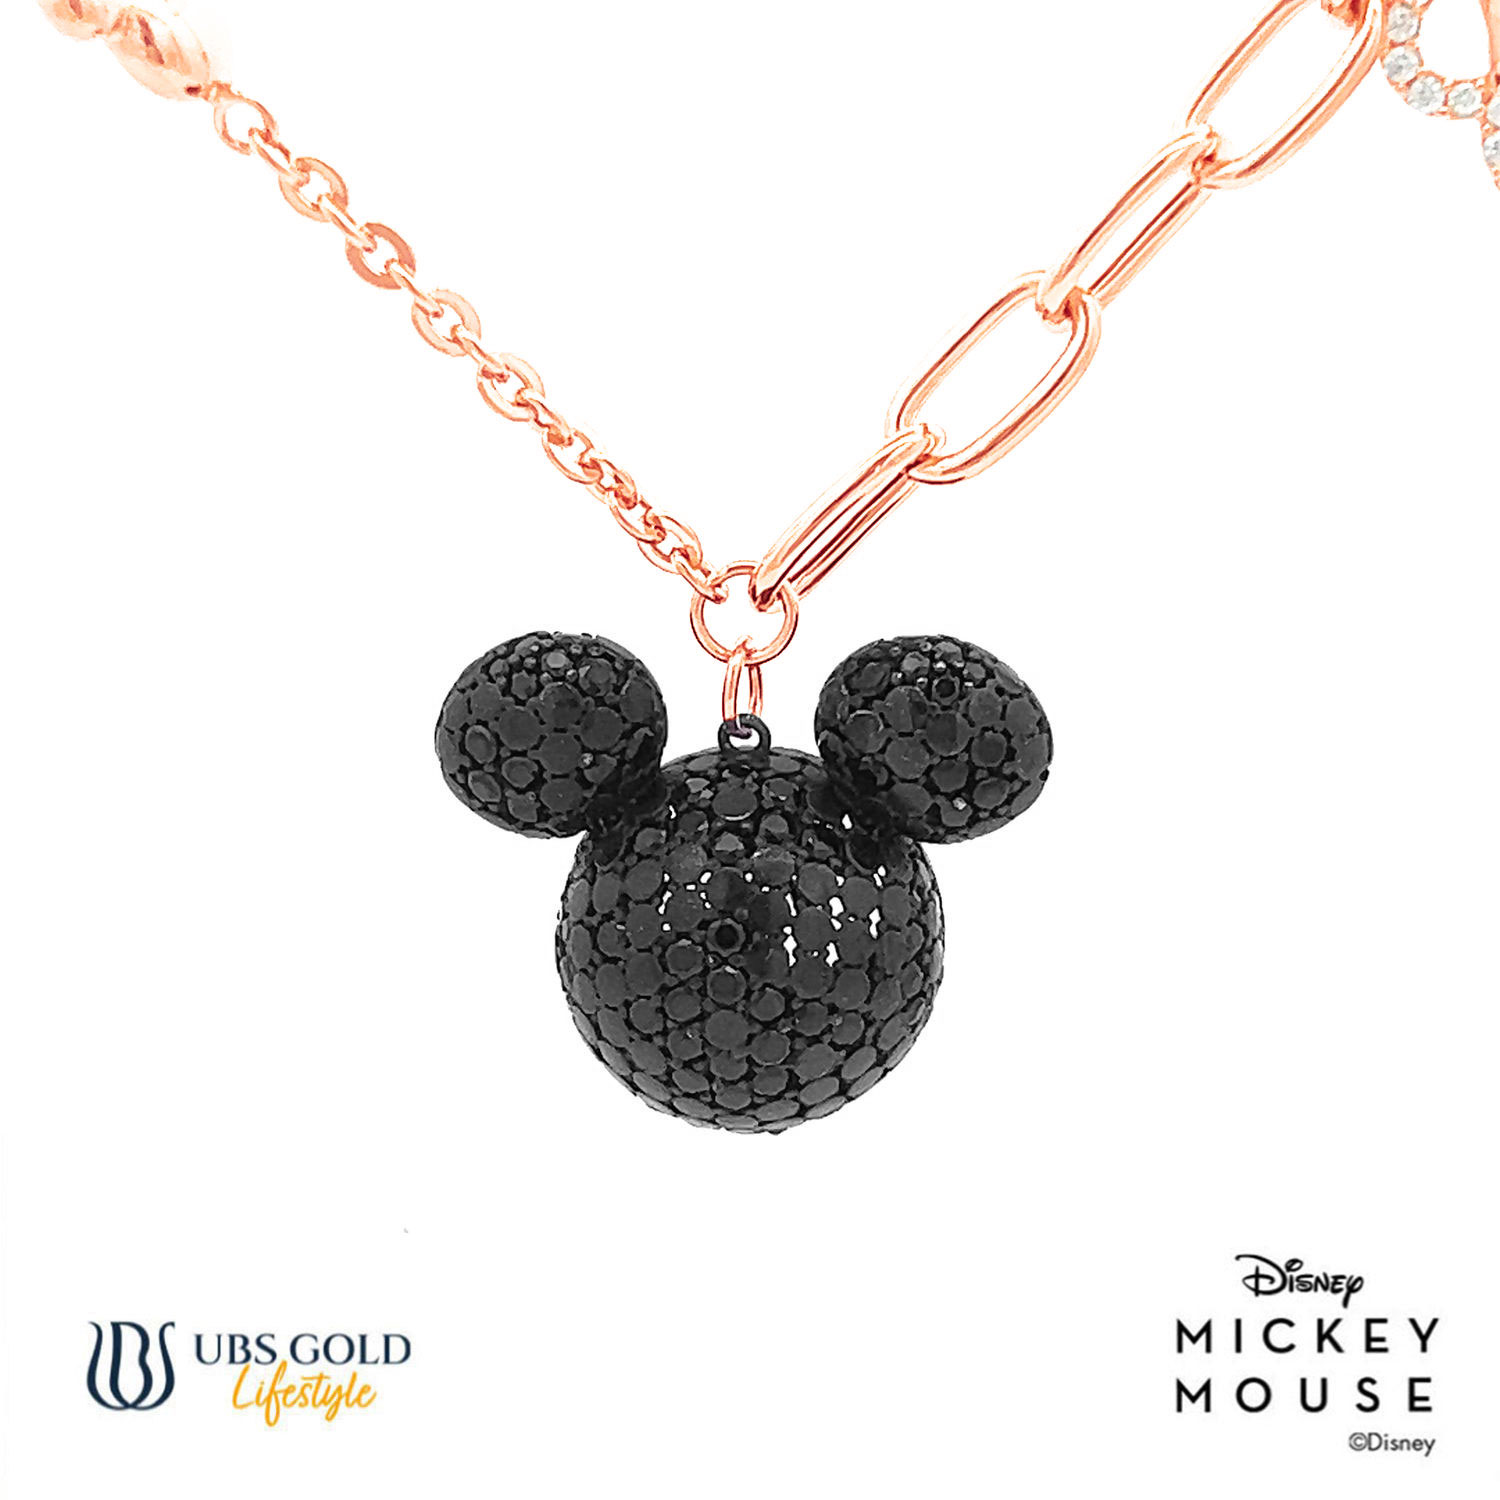 UBS Gold Kalung Emas Disney Mickey Mouse - Hky0210 - 17K